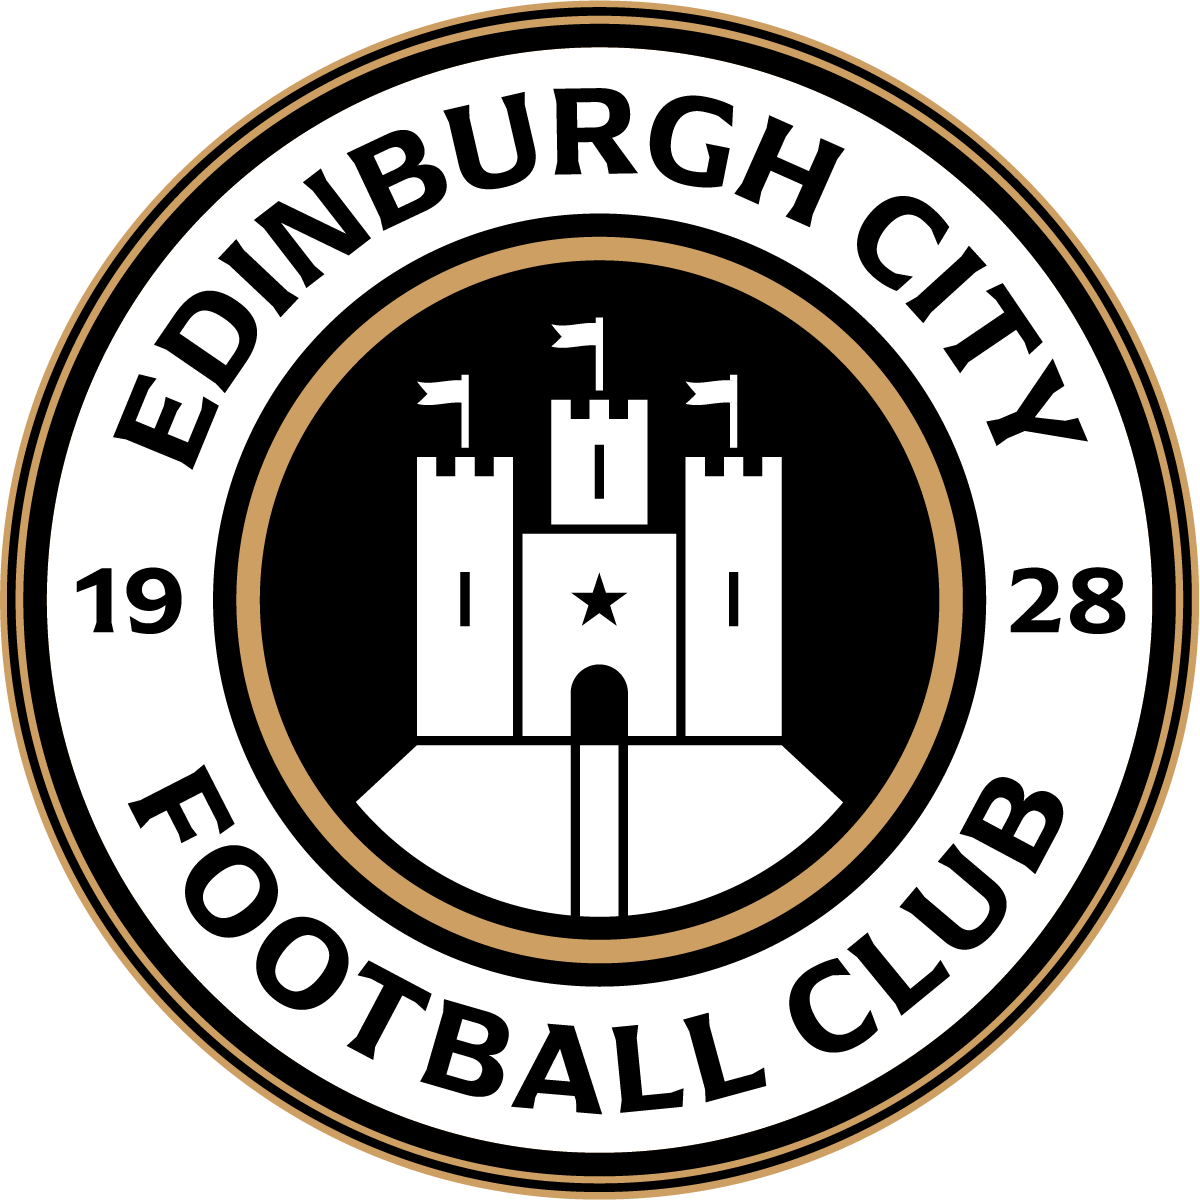 Edinburgh City Football Club